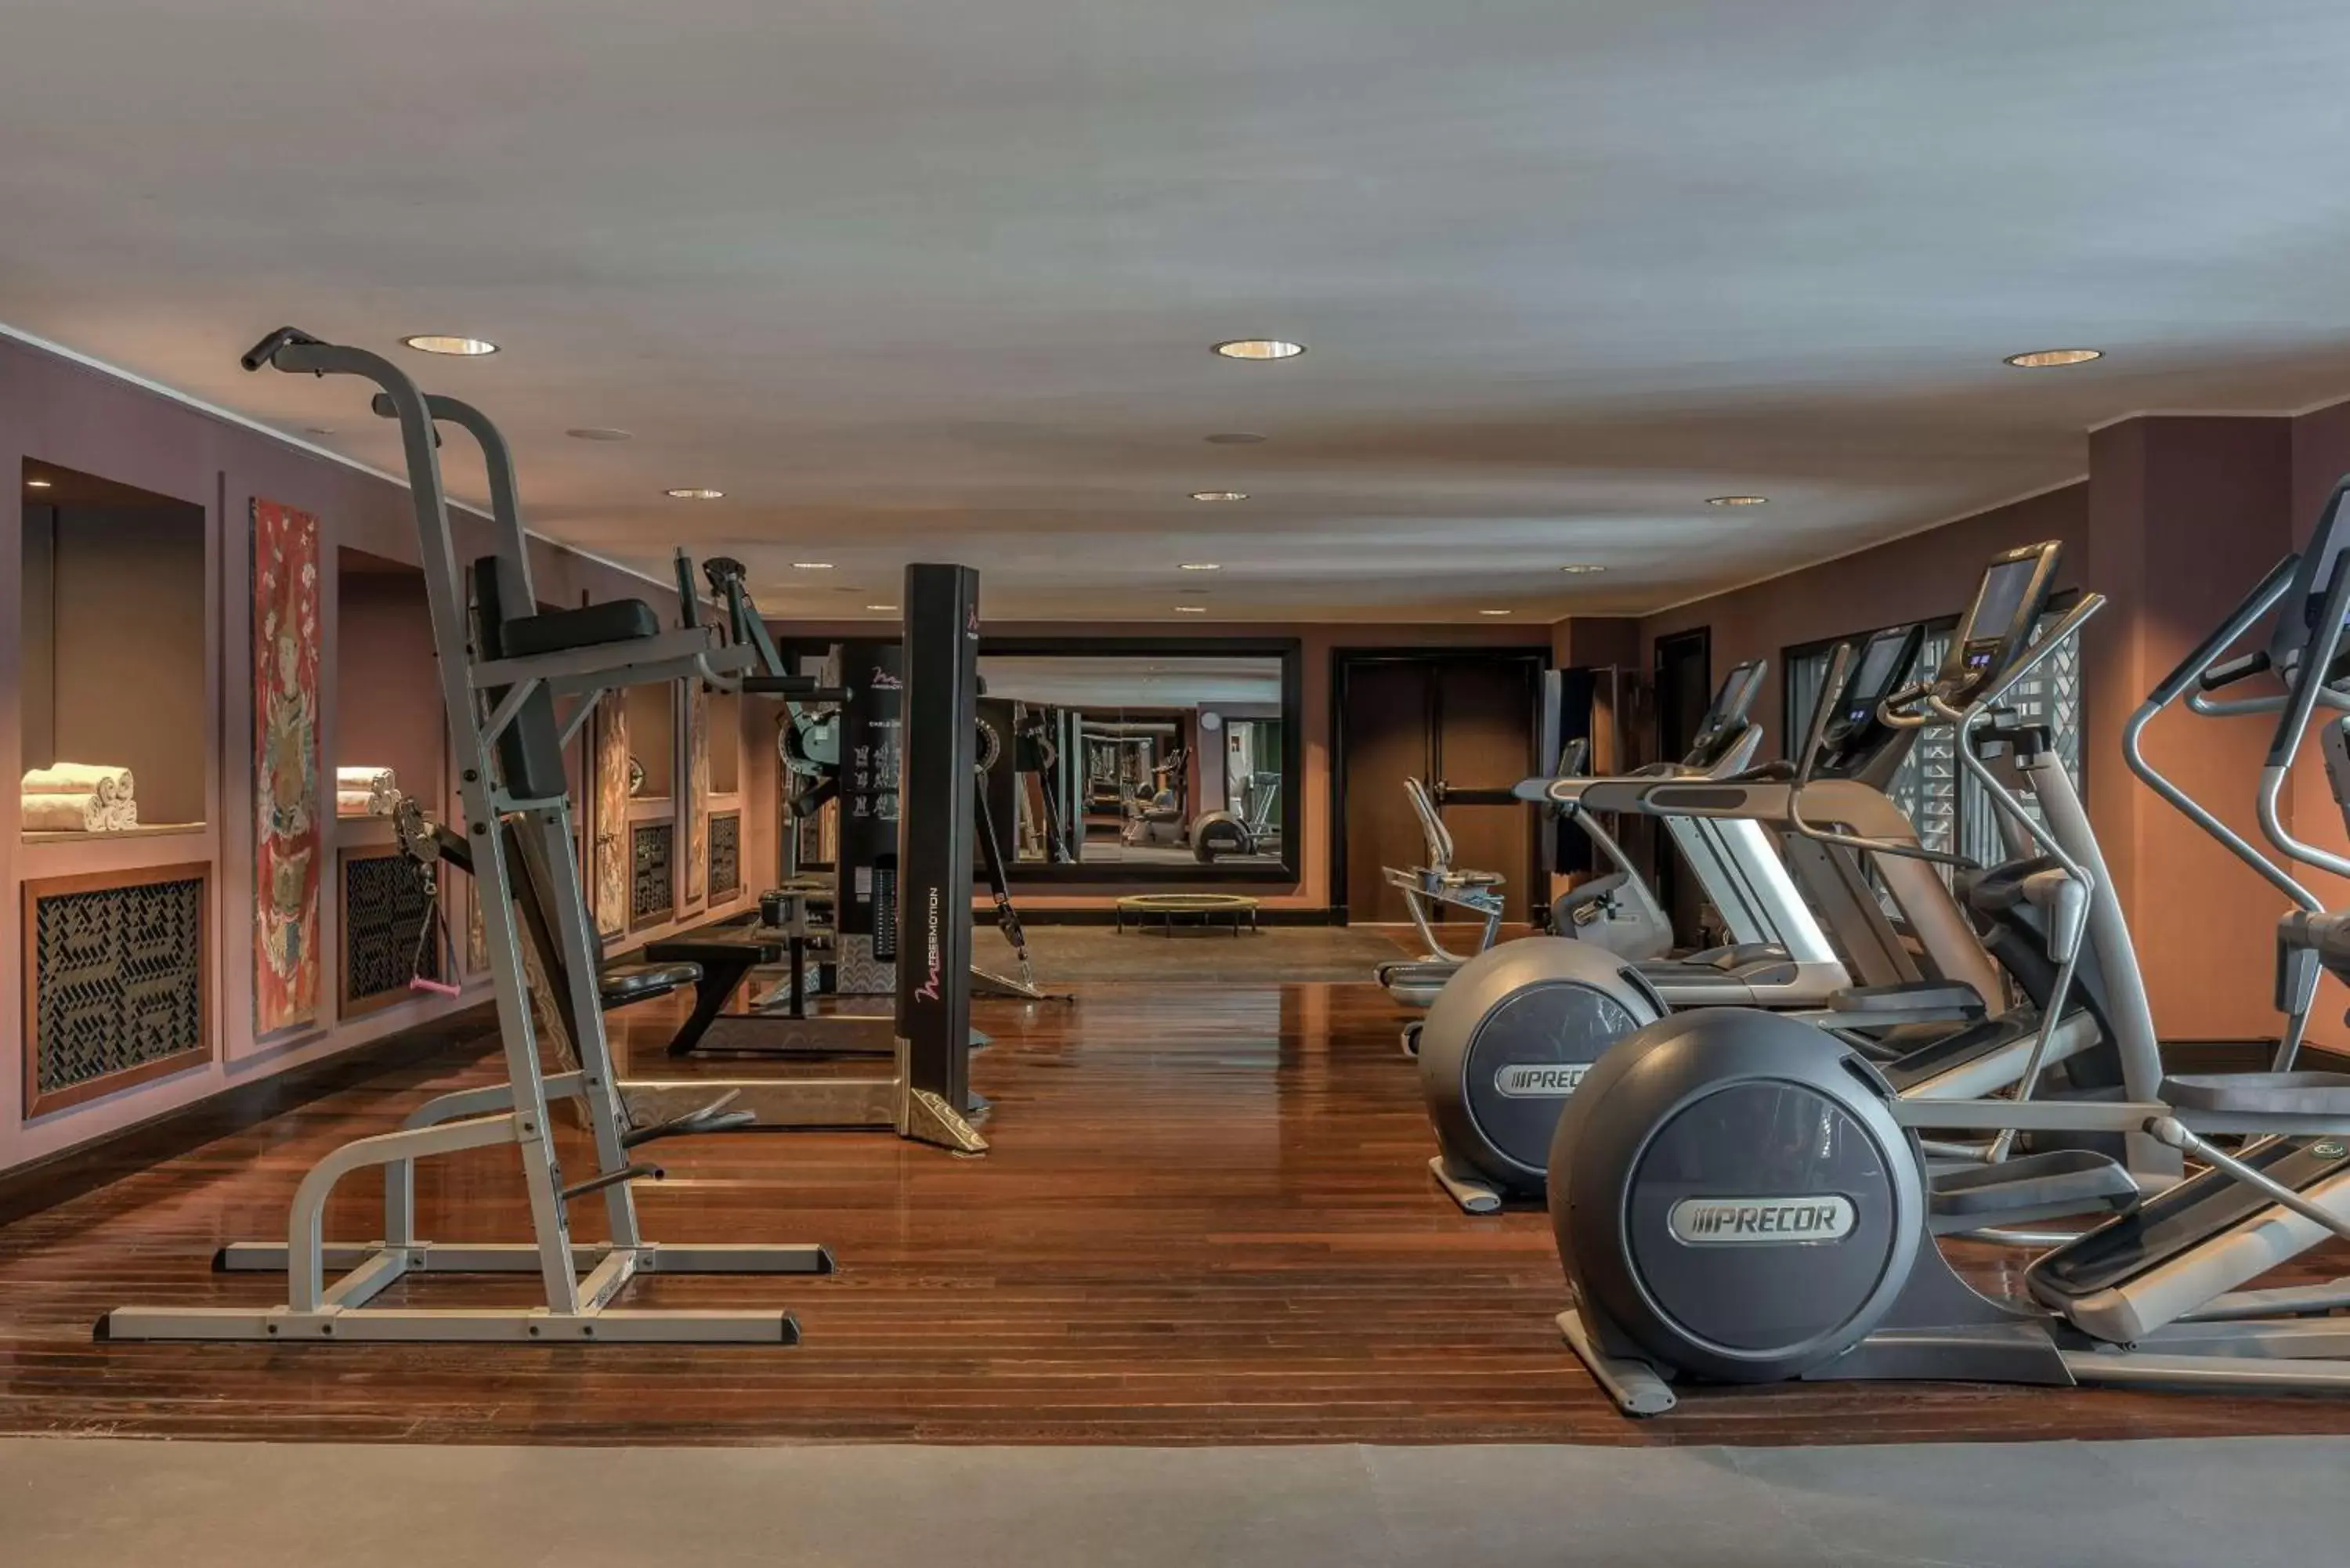 Fitness centre/facilities, Fitness Center/Facilities in Hilton Evian Les Bains